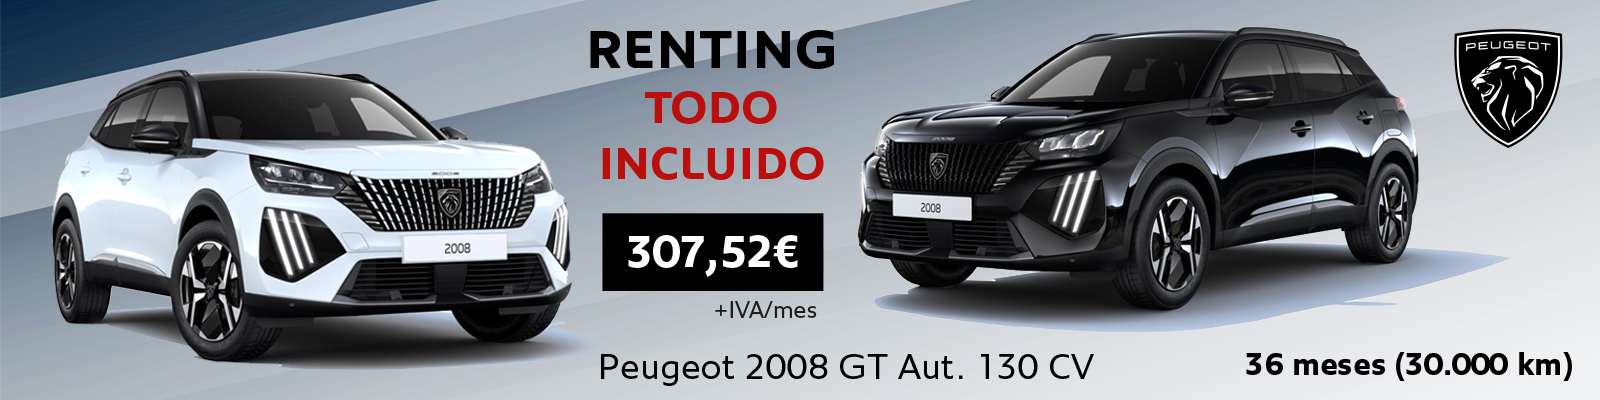 Renting TODO INCLUIDO Peugeot 2008 GT Aut. 307€/mes